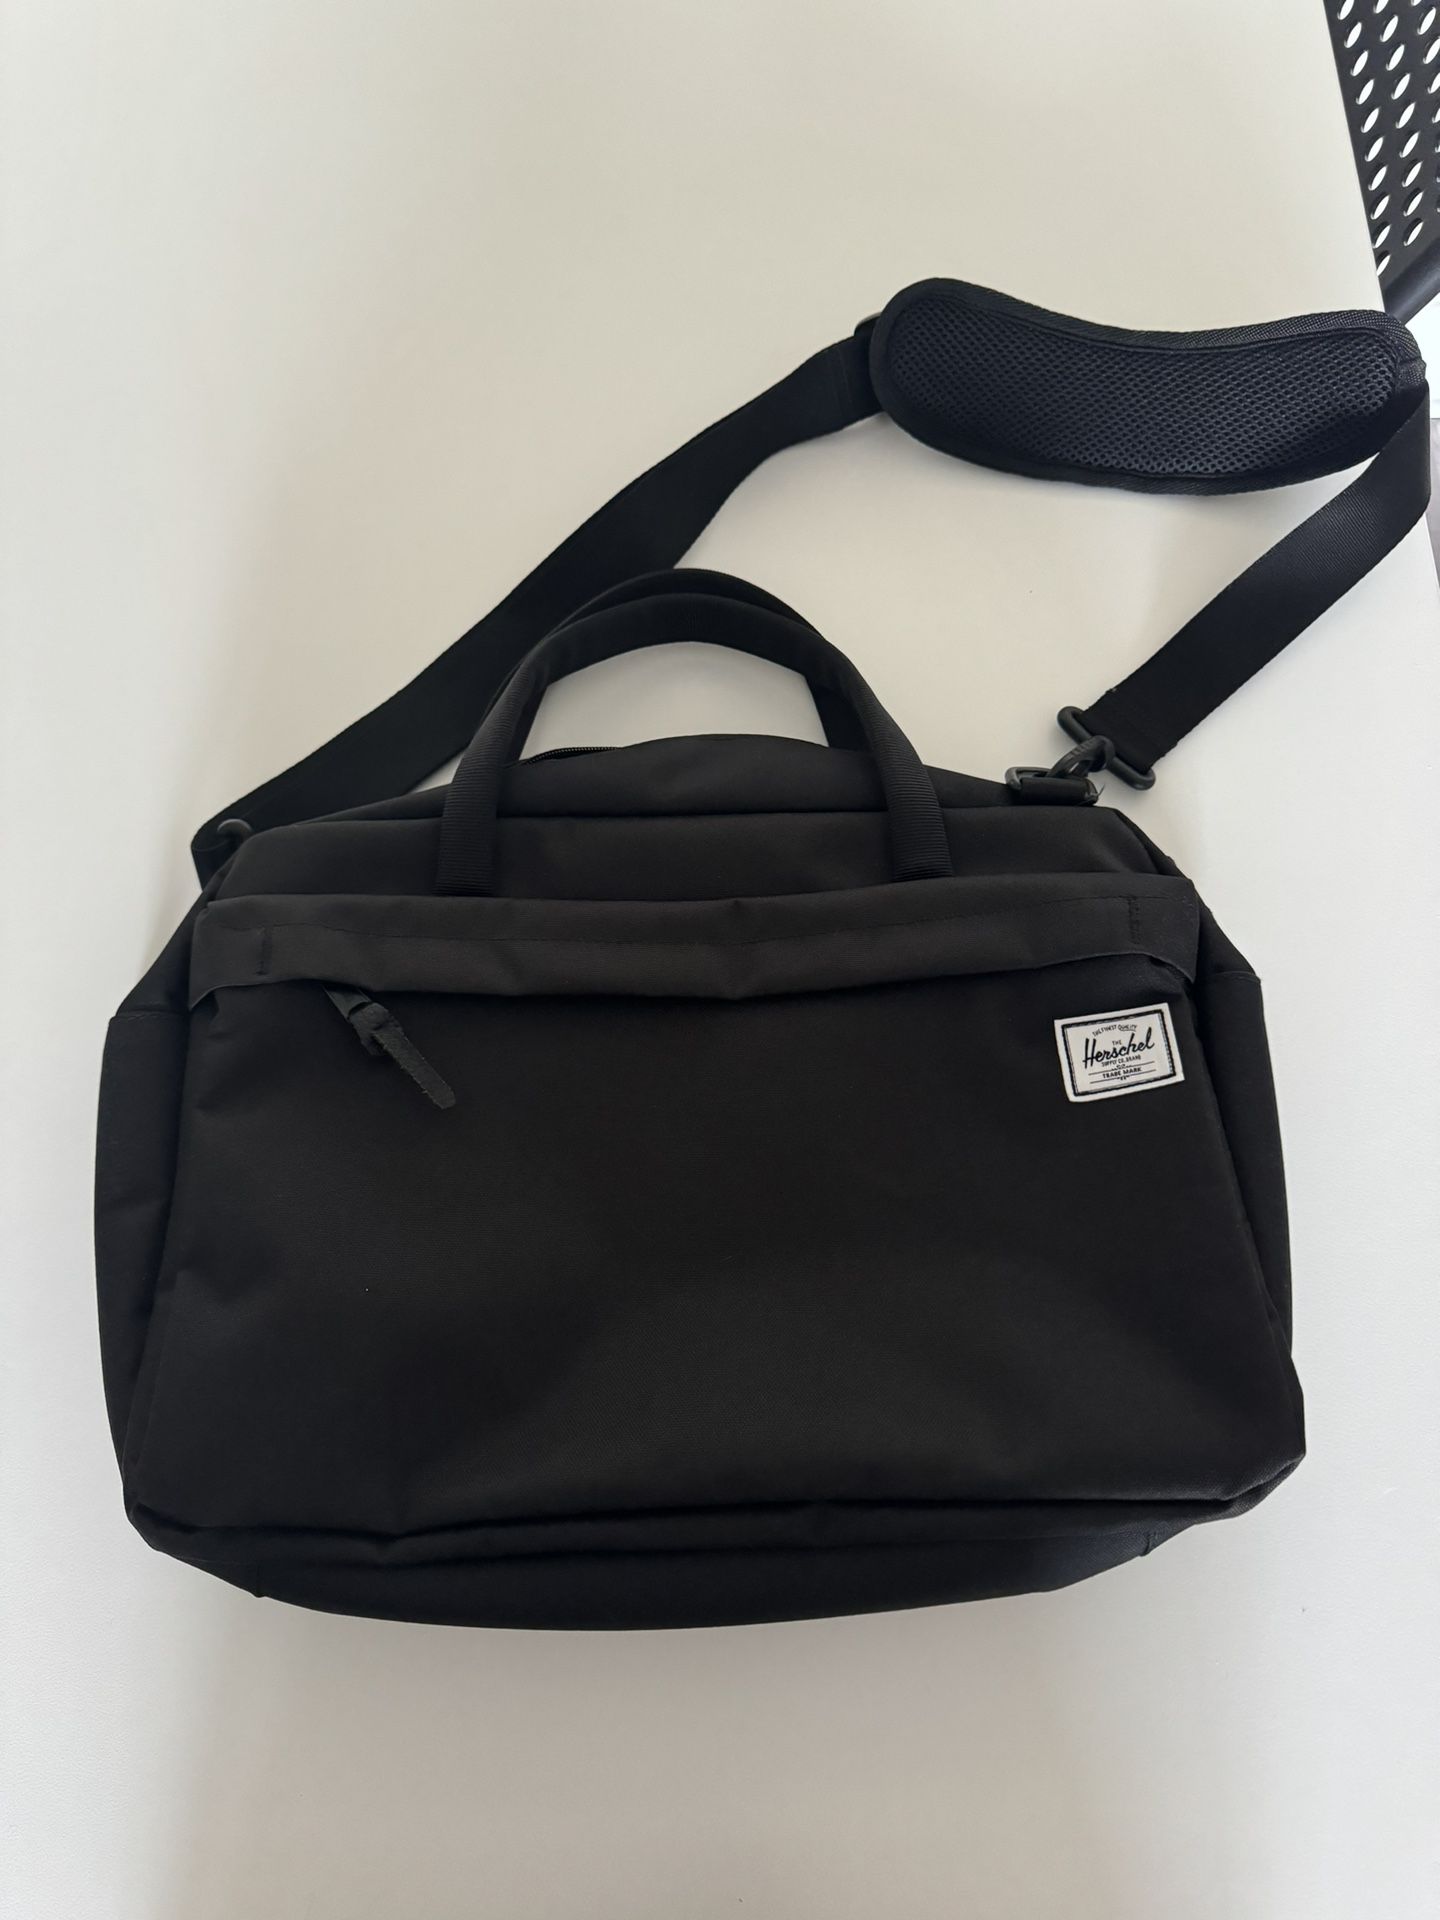 Herschel Black Messenger Bag New Without Tags